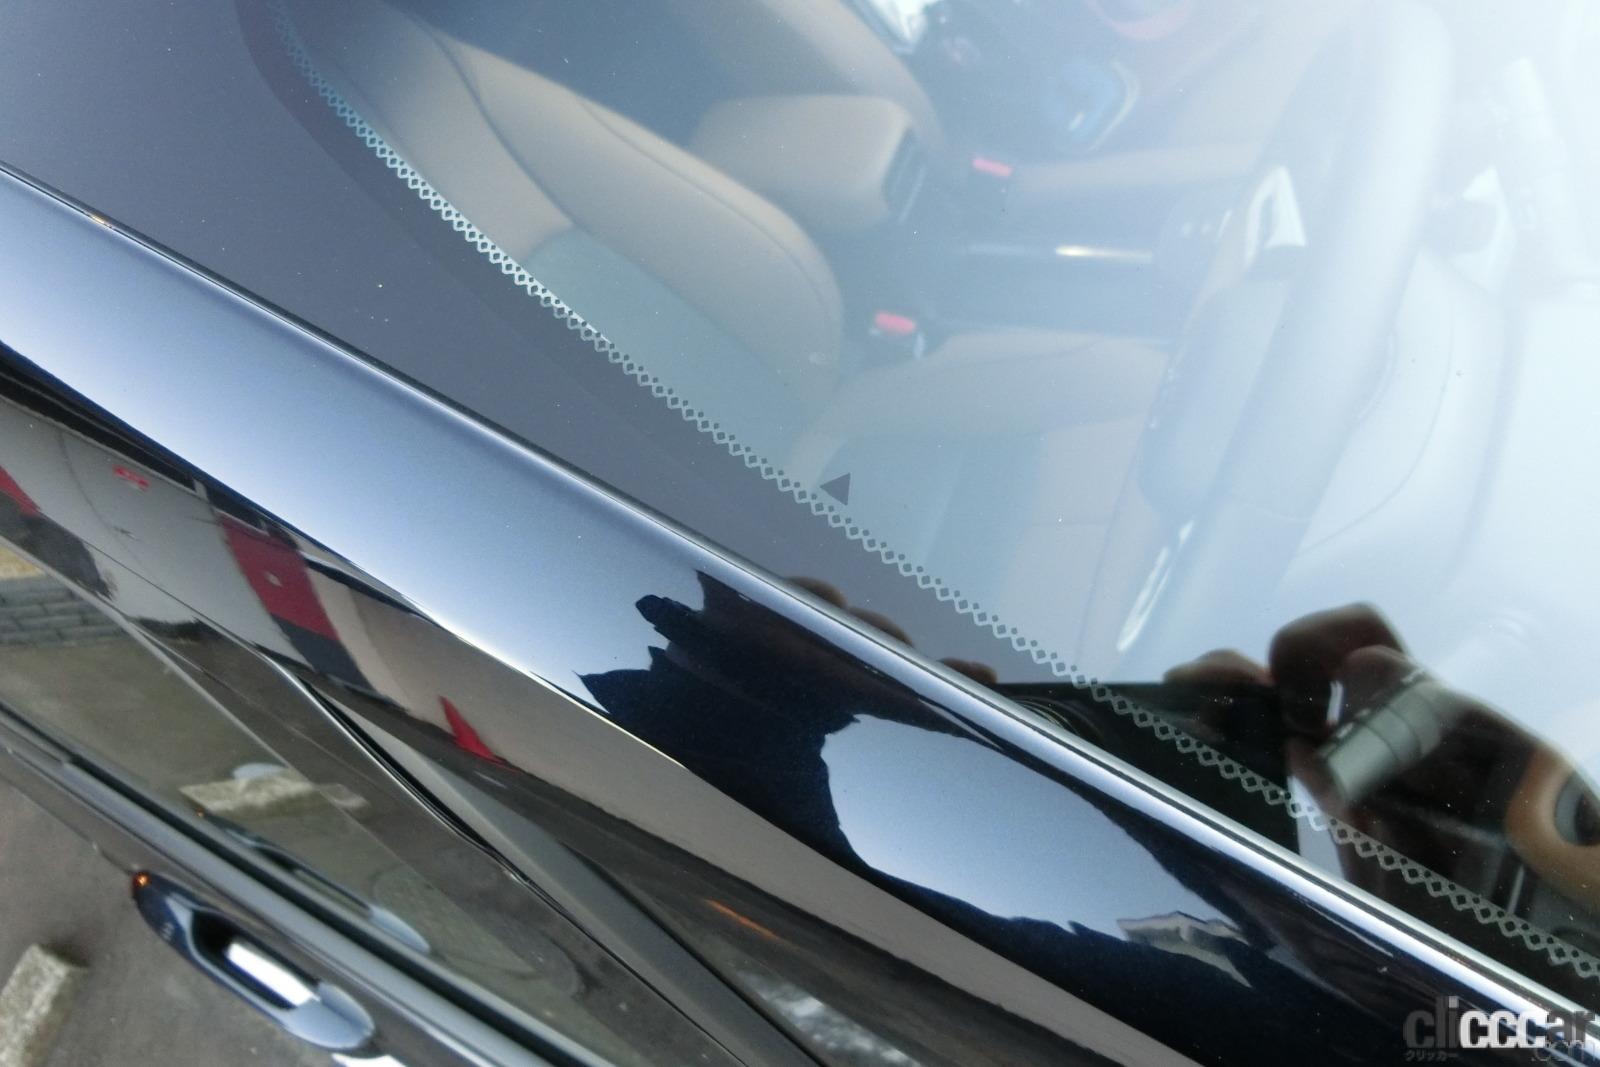 Fit Front 画像 知っていますか ホンダ車のフロントガラスにある三角マークの秘密 購入検討者に贈る 最新フィット試乗記 燃費 まとめ編 新型車ねちねちチェック第5弾 Clicccar Com